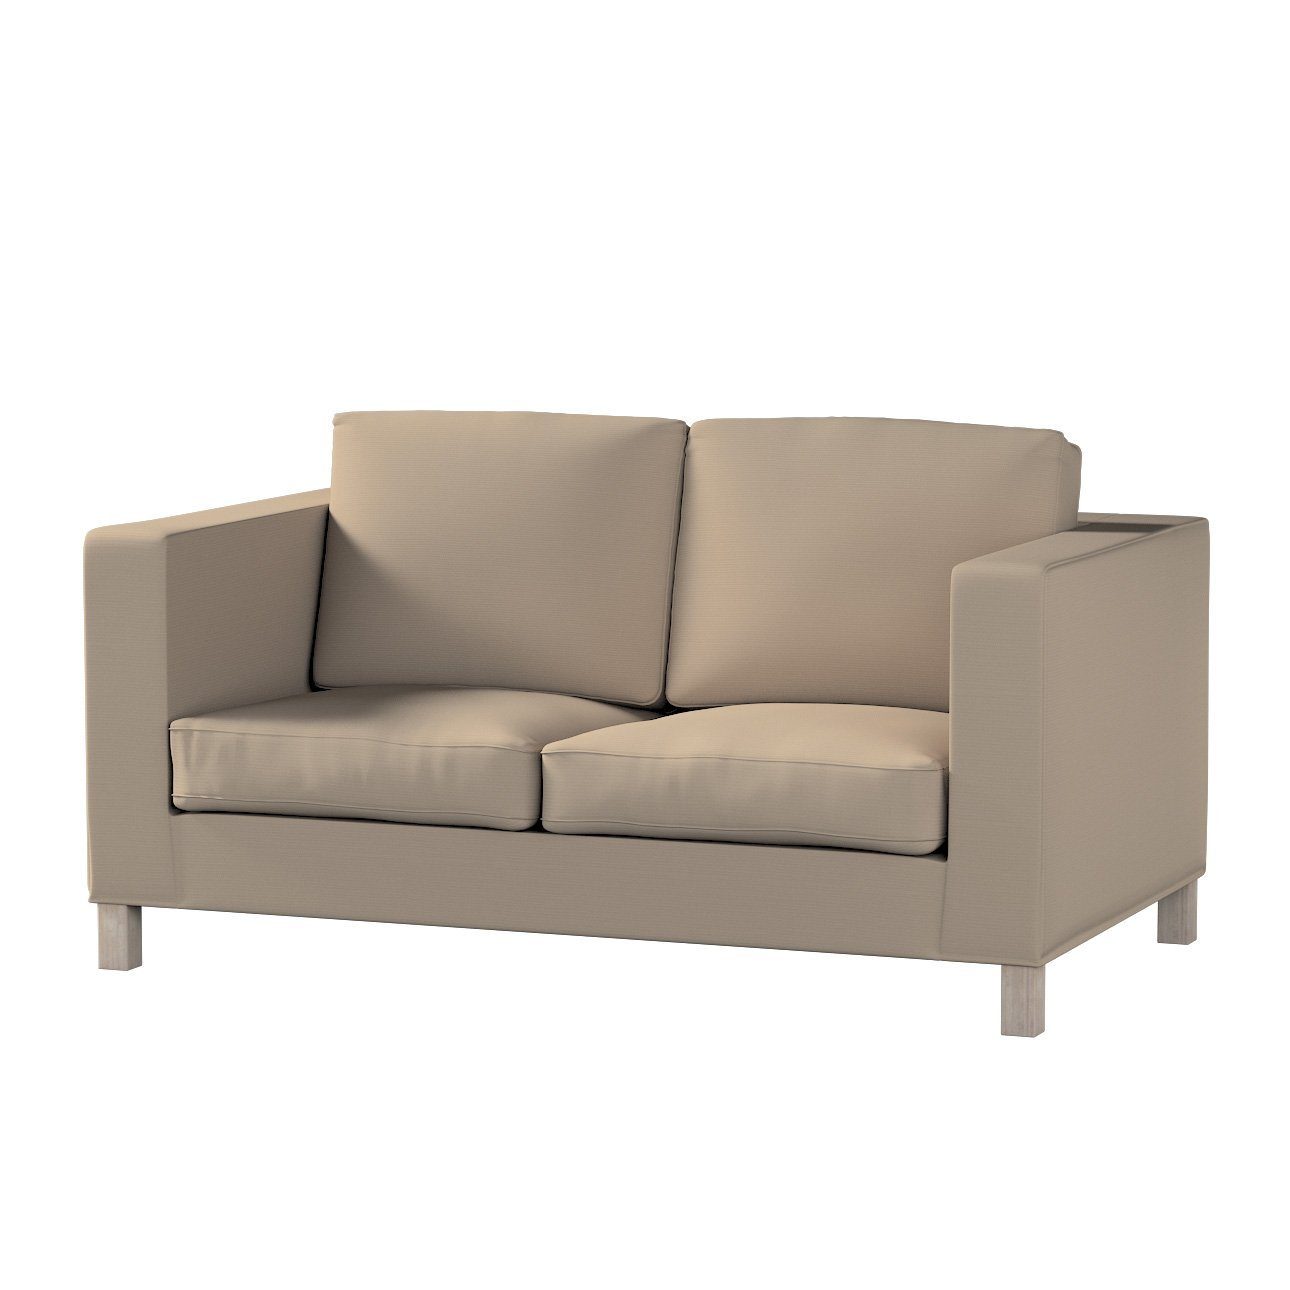 Sofahusse Karlanda 2-Sitzer Sofa nicht ausklappbar kurz, Cotton Panama, Dekoria grau-braun